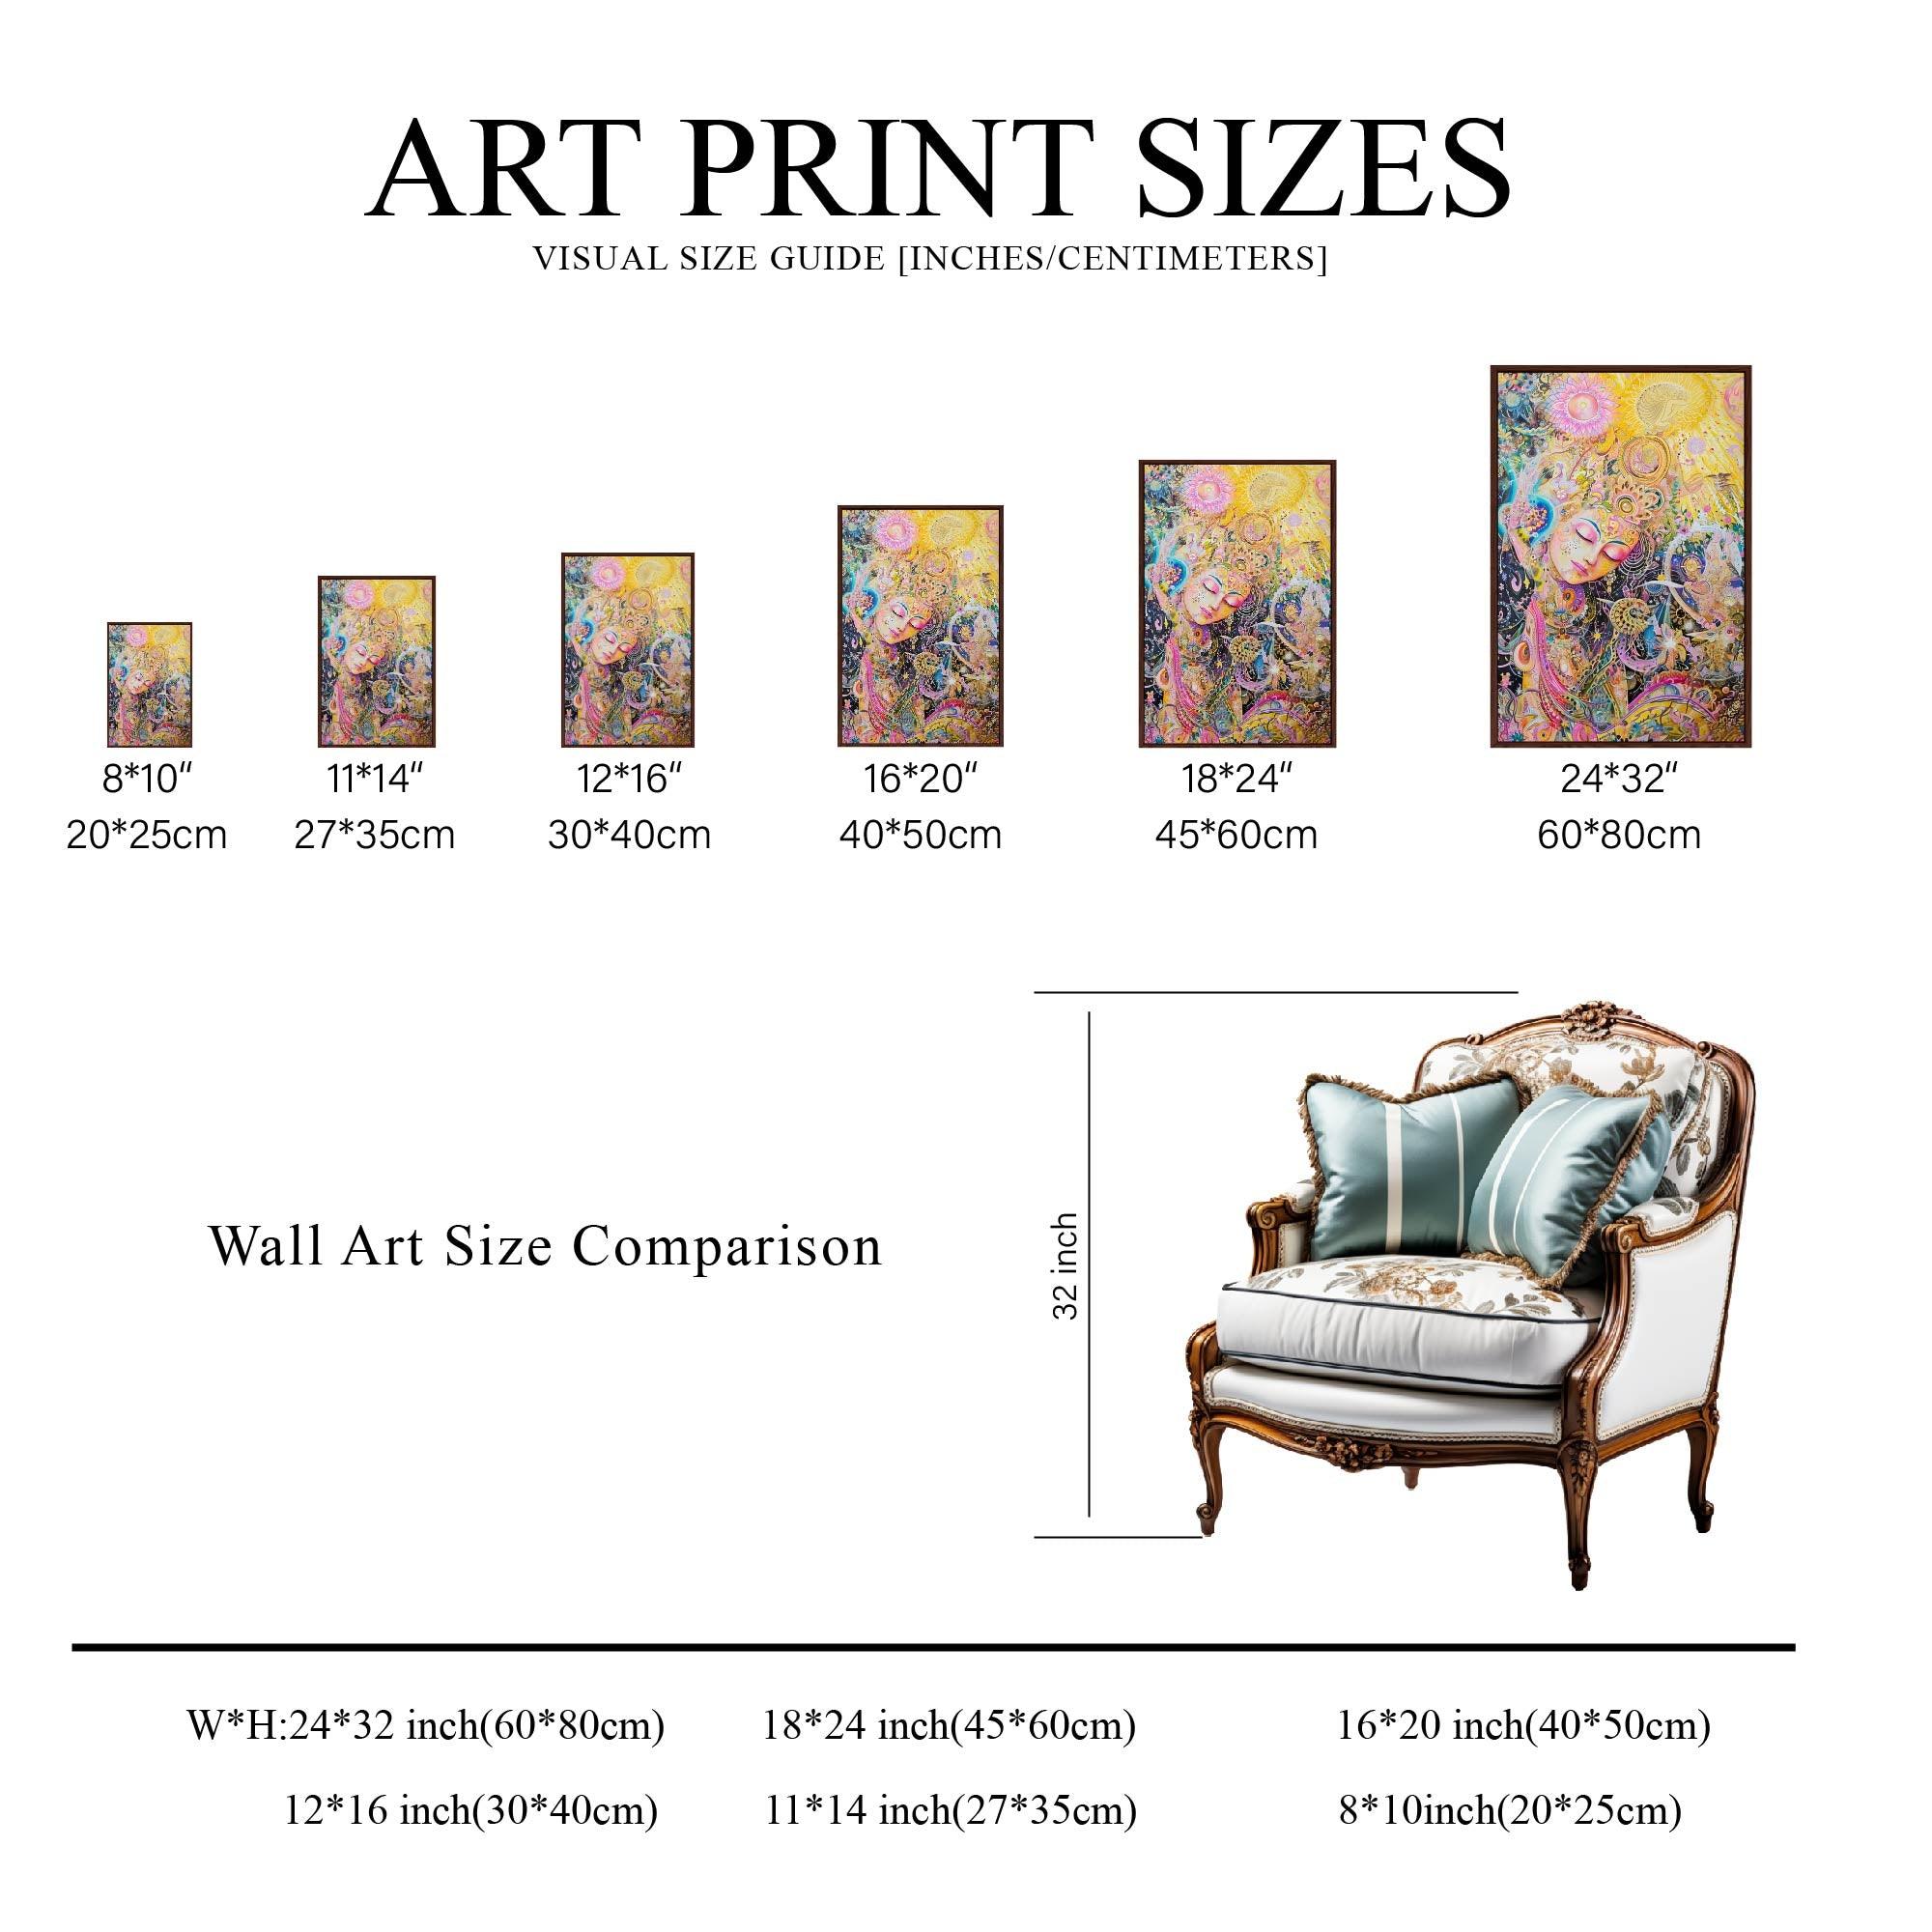 Illustration | Colorful Wall Art Decor |Wall Art Print |Digital Art Poster|Moody Wall Decoration，bedroom livingroom,kidsroom|PRINTABLE Art |Digital Download